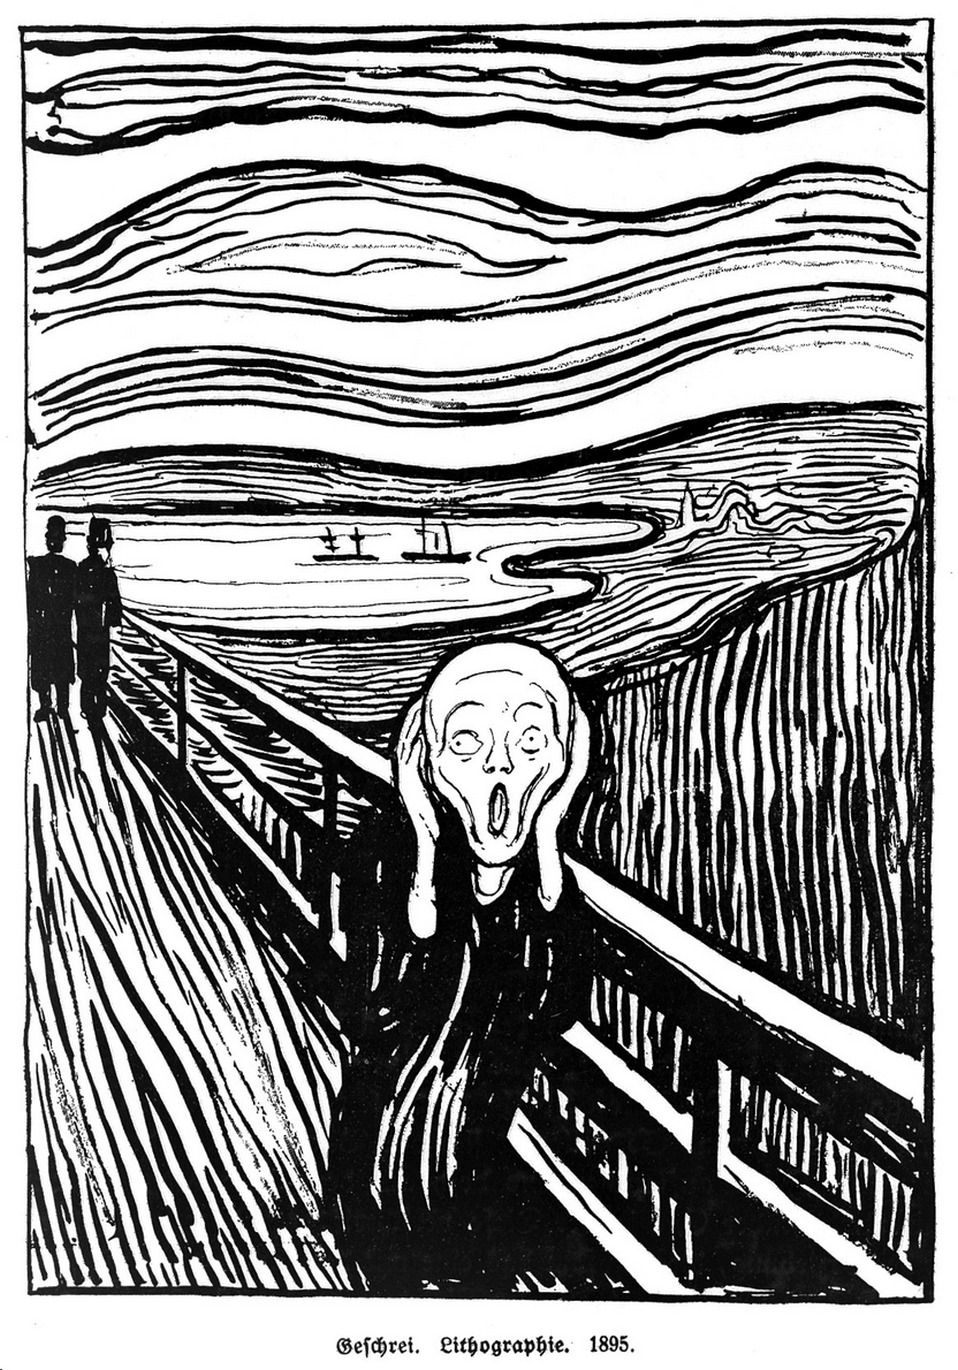 Edvard Munch - The Scream (3) - 1895